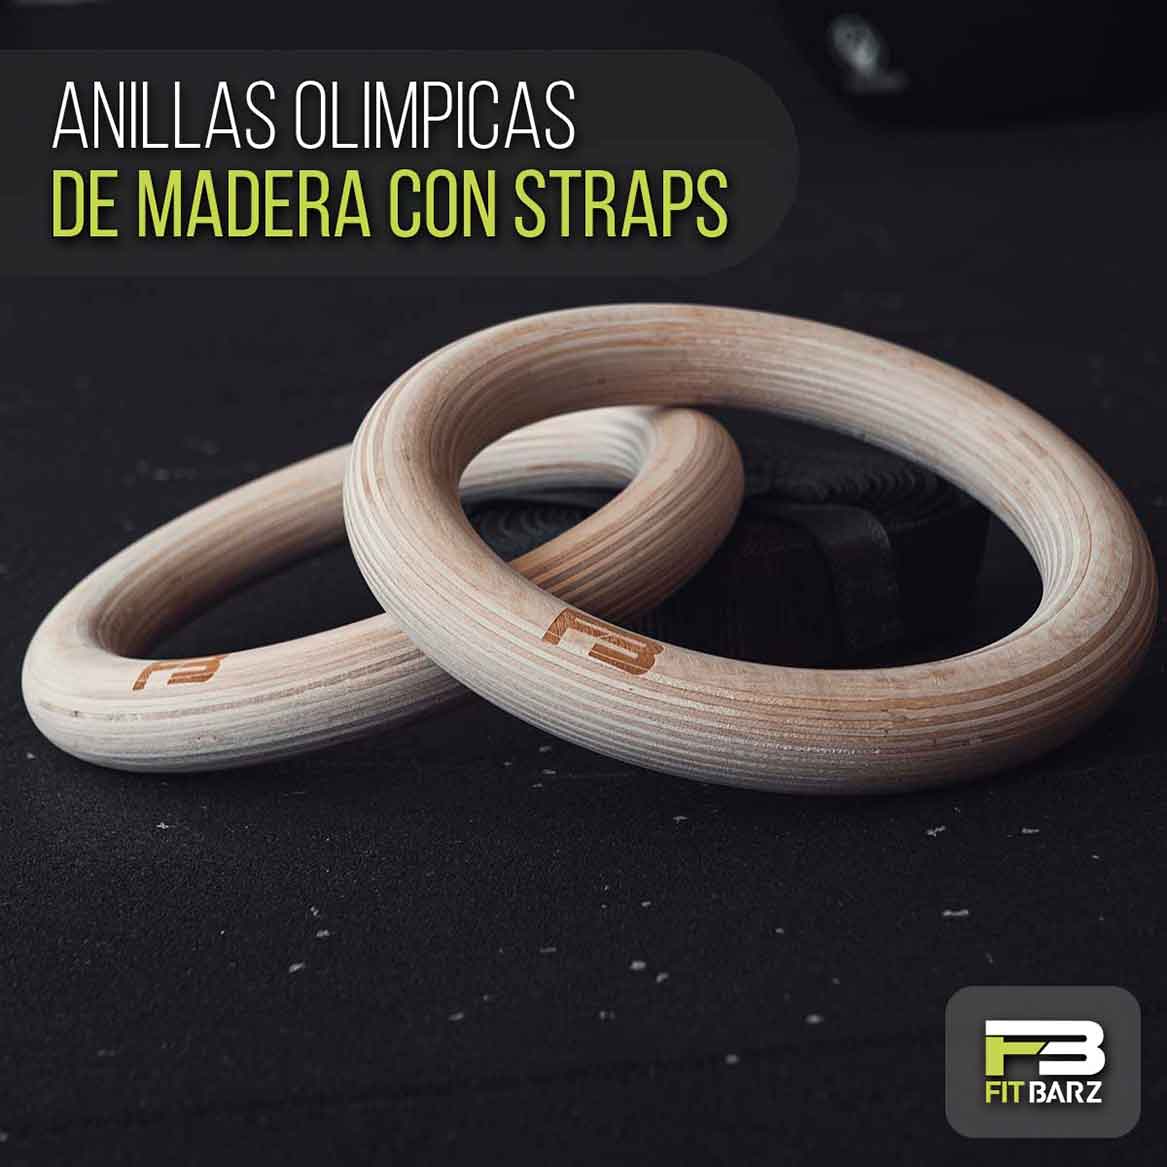 Anillas Olimpicas de Madera con Straps - Fitbarz